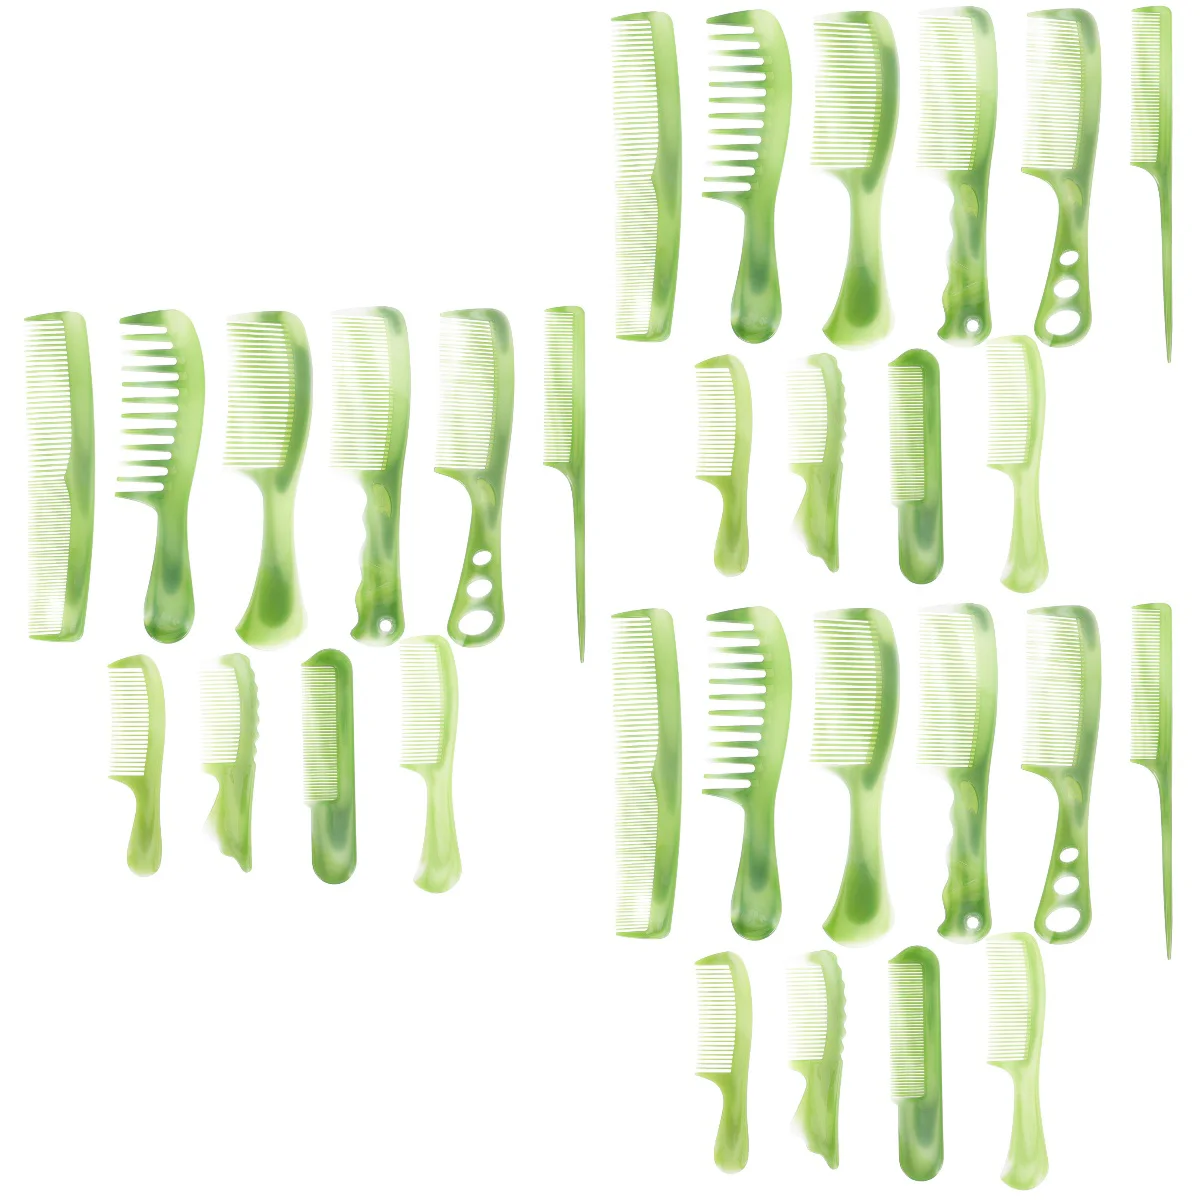 3 Sets 10-pack Hair Combs Styling Tool Plastic Beard Kit Men Straightening Portable Women